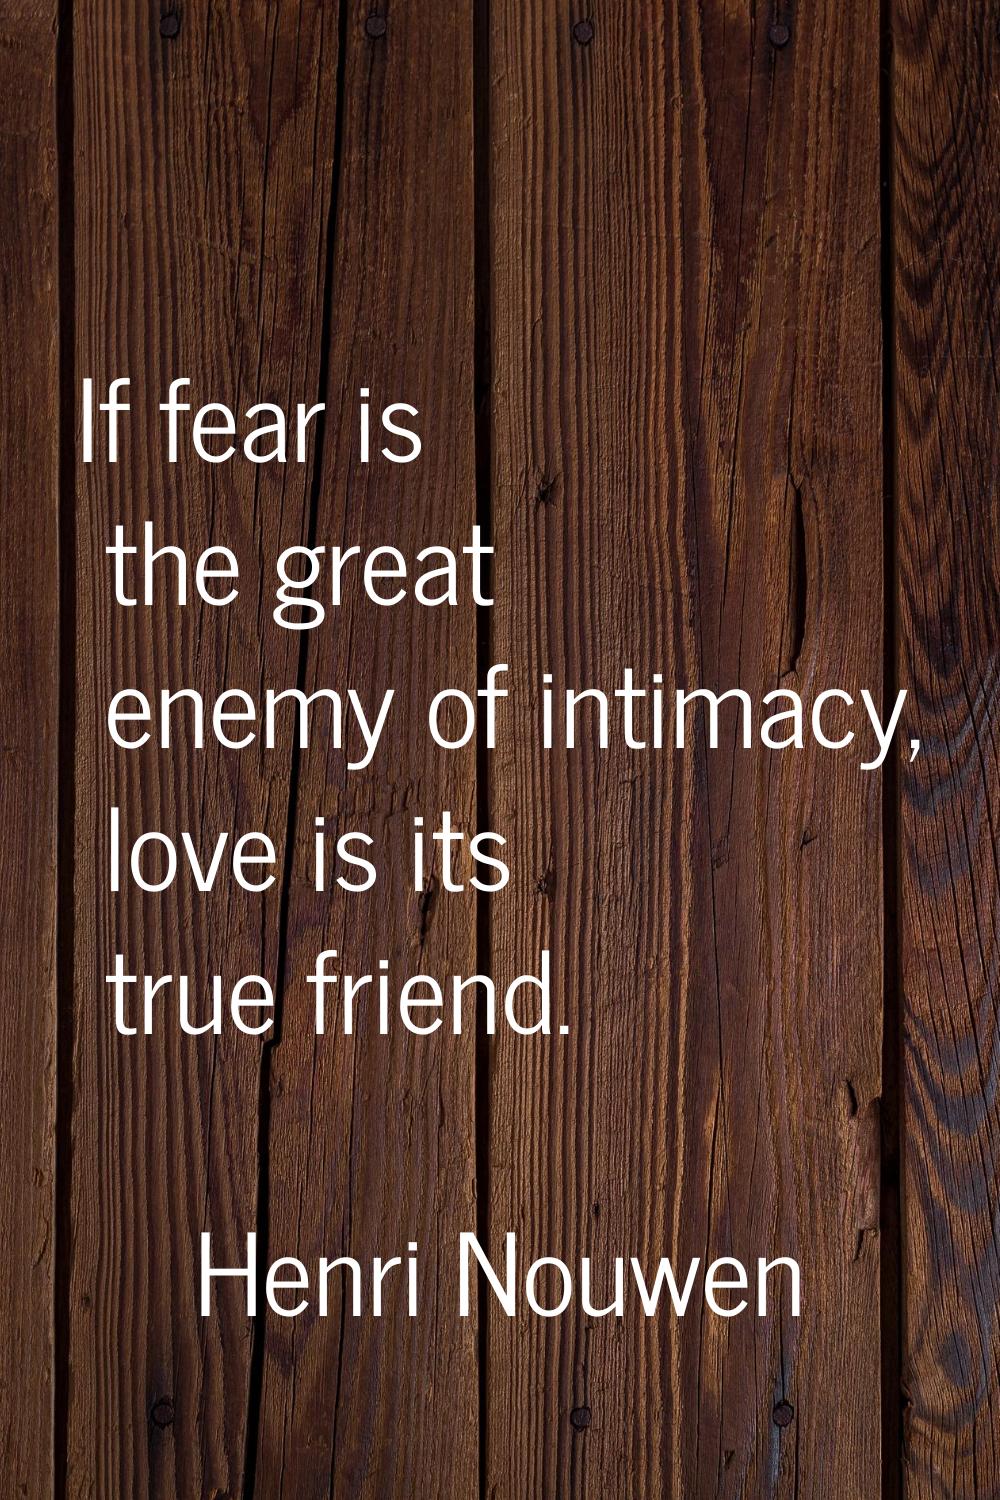 If fear is the great enemy of intimacy, love is its true friend.